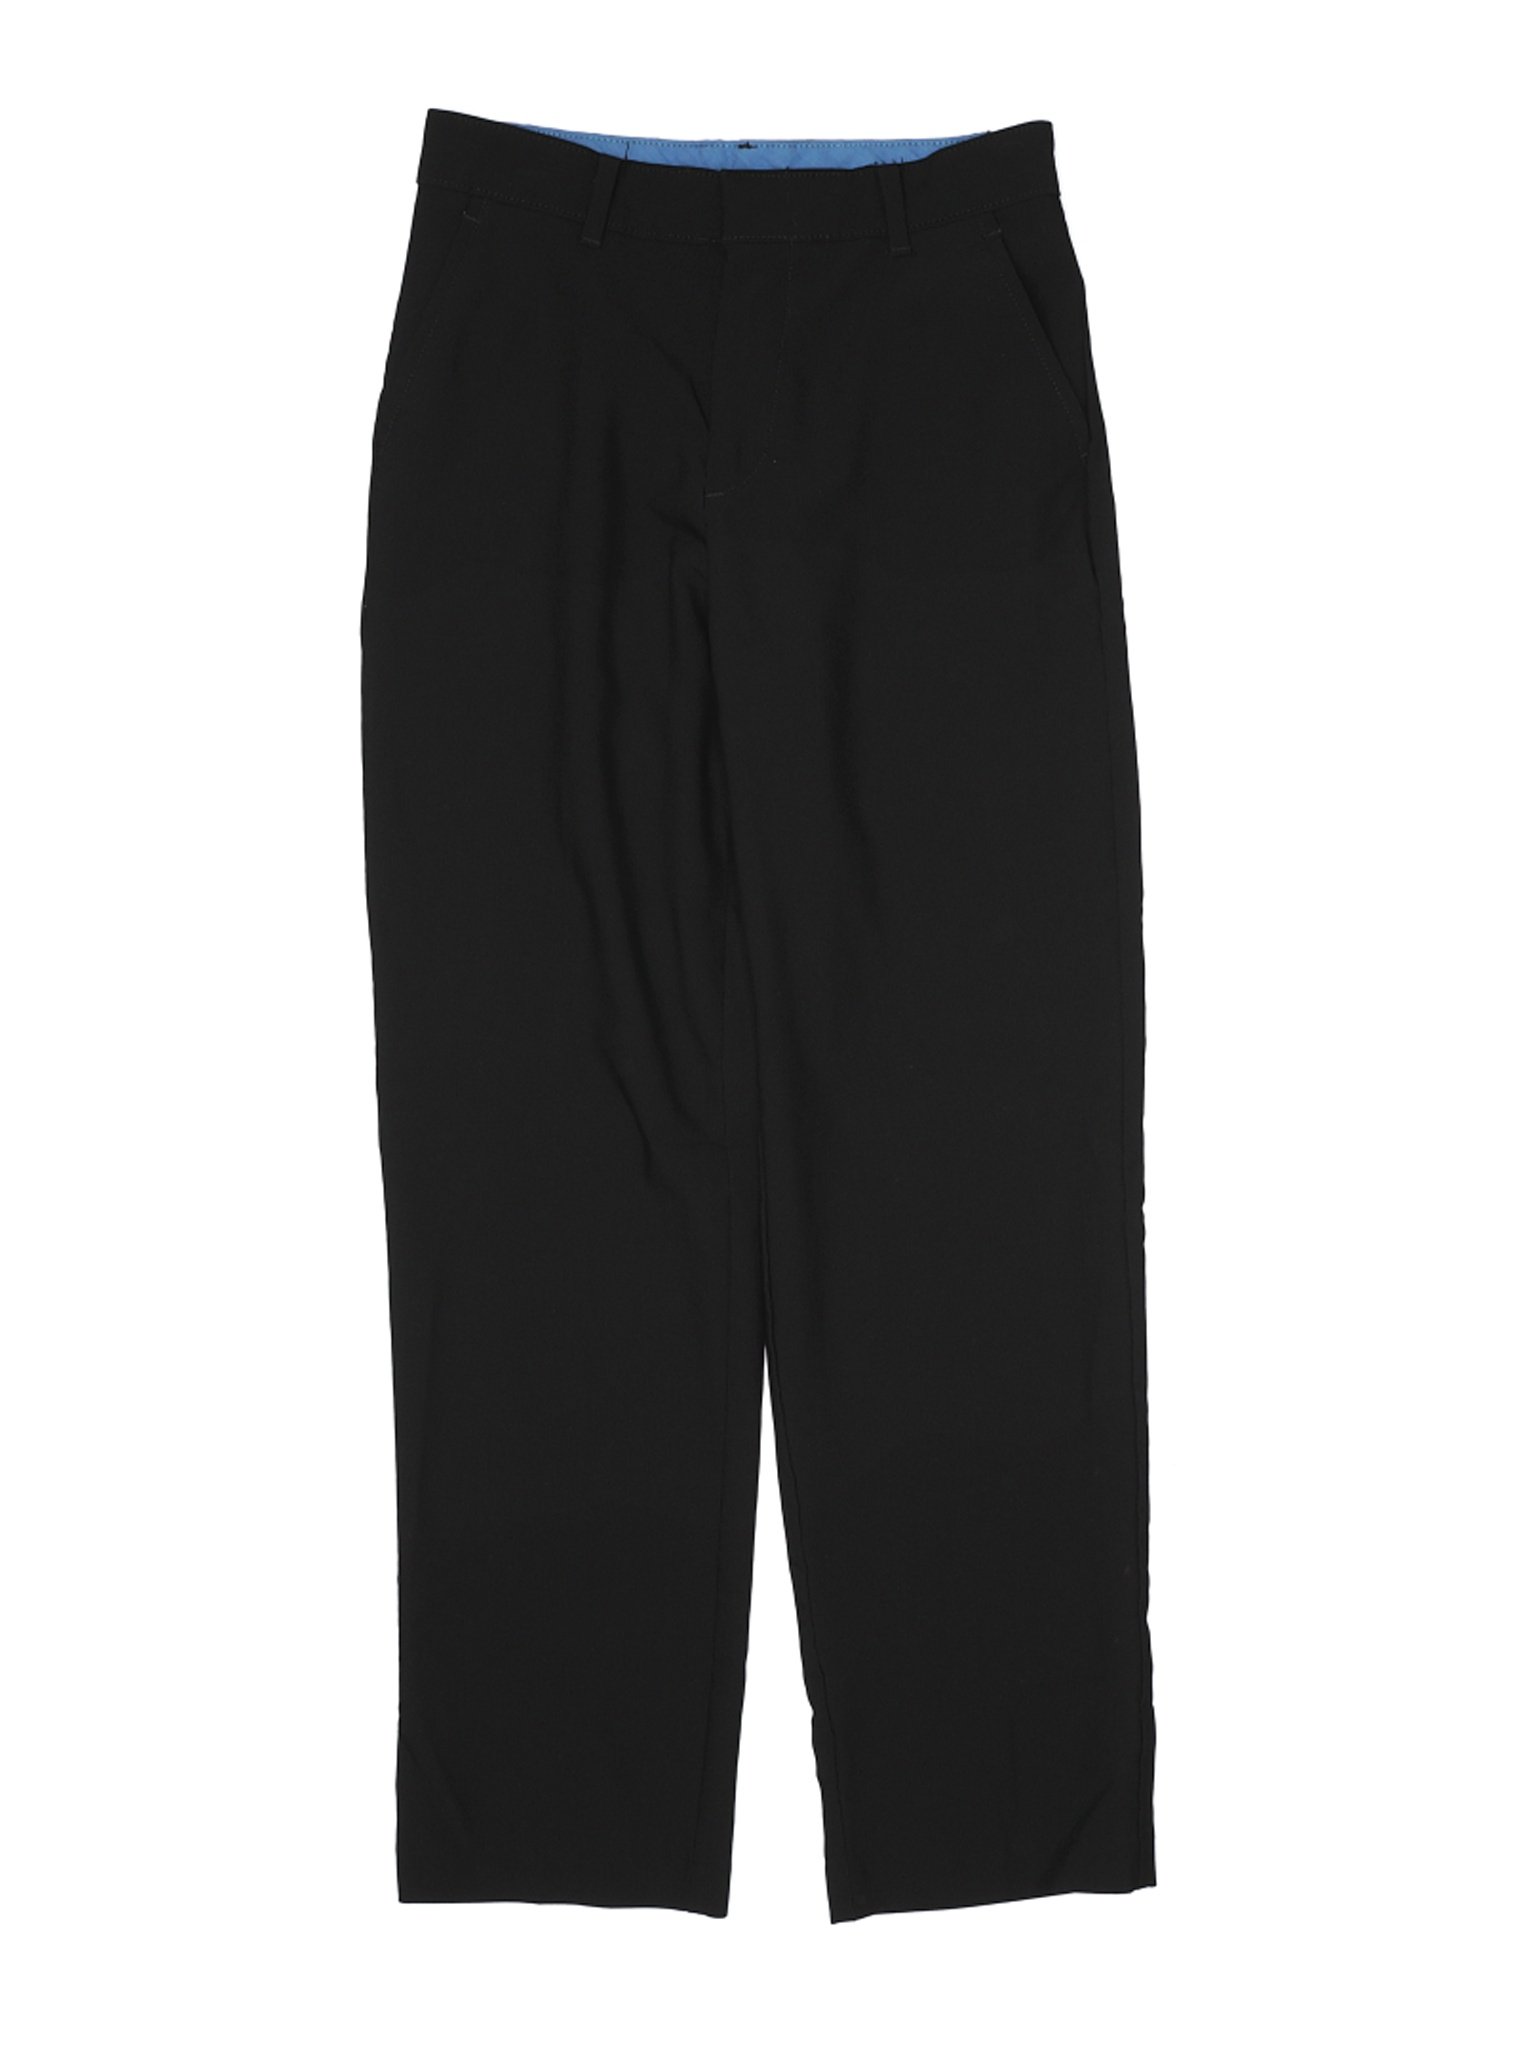 IZOD Boys Black Dress Pants 12 | eBay